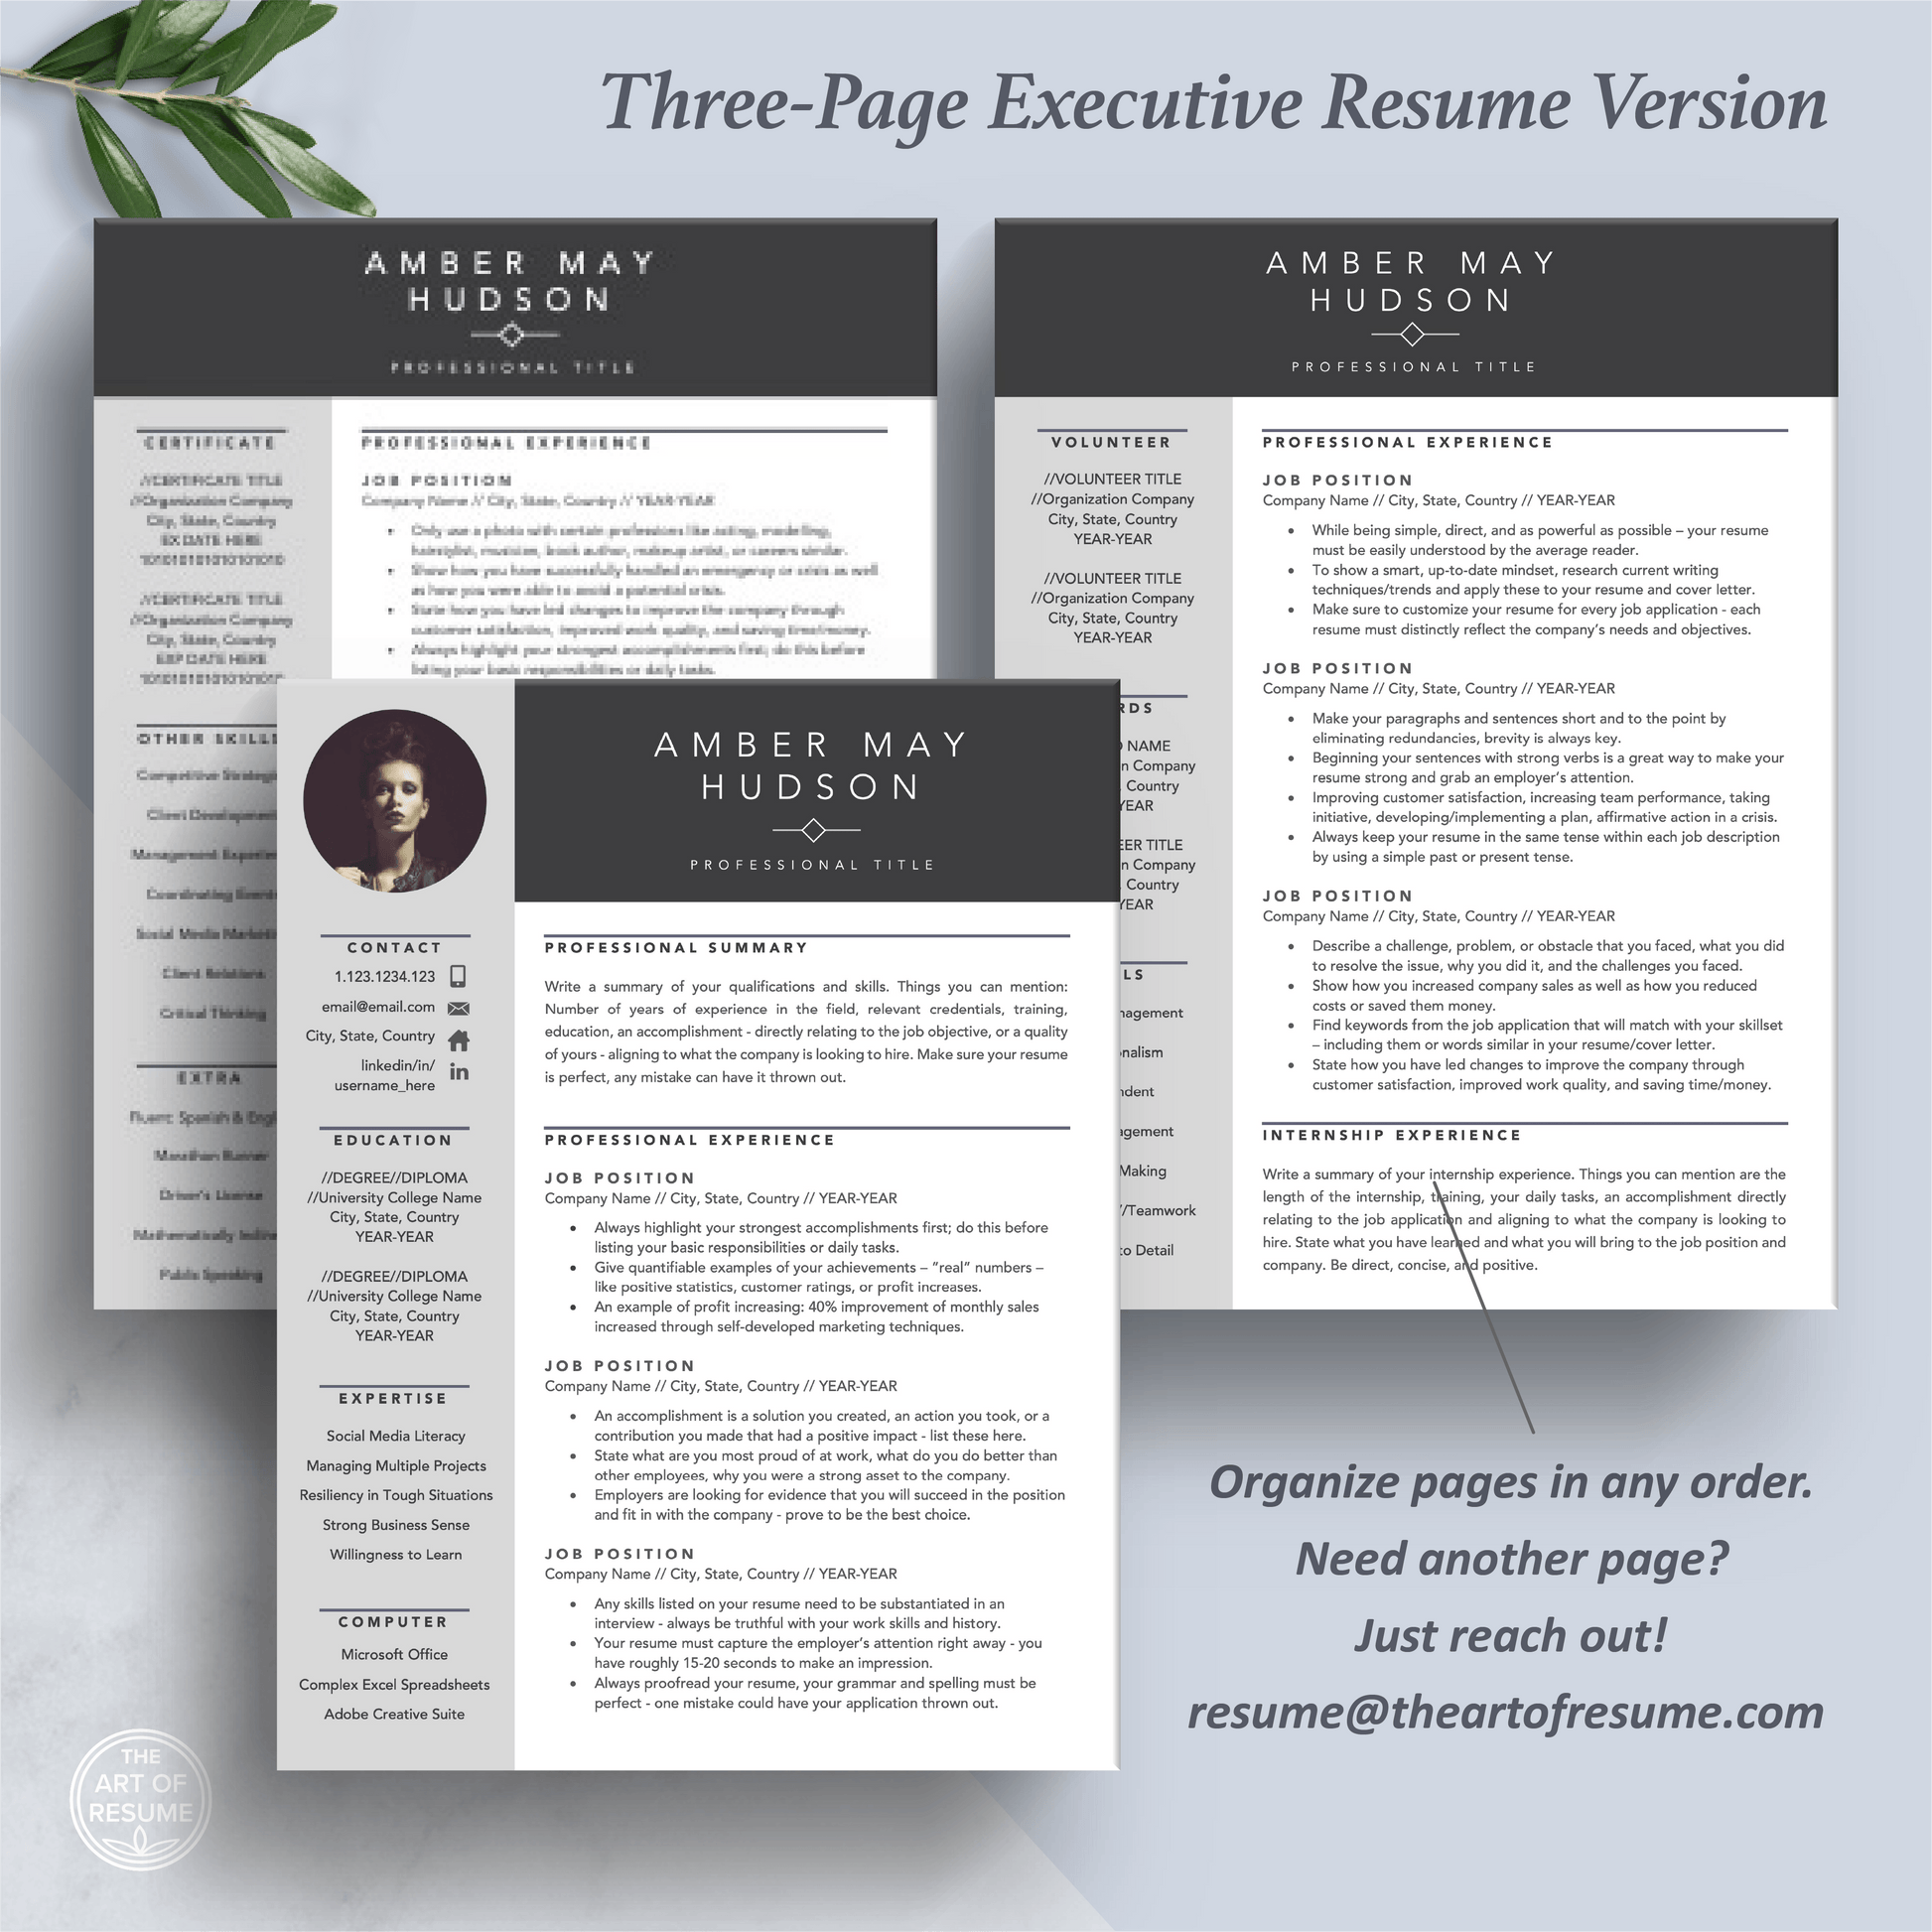 Creative Resume Design with Photo | Stylist CV - The Art of Resume